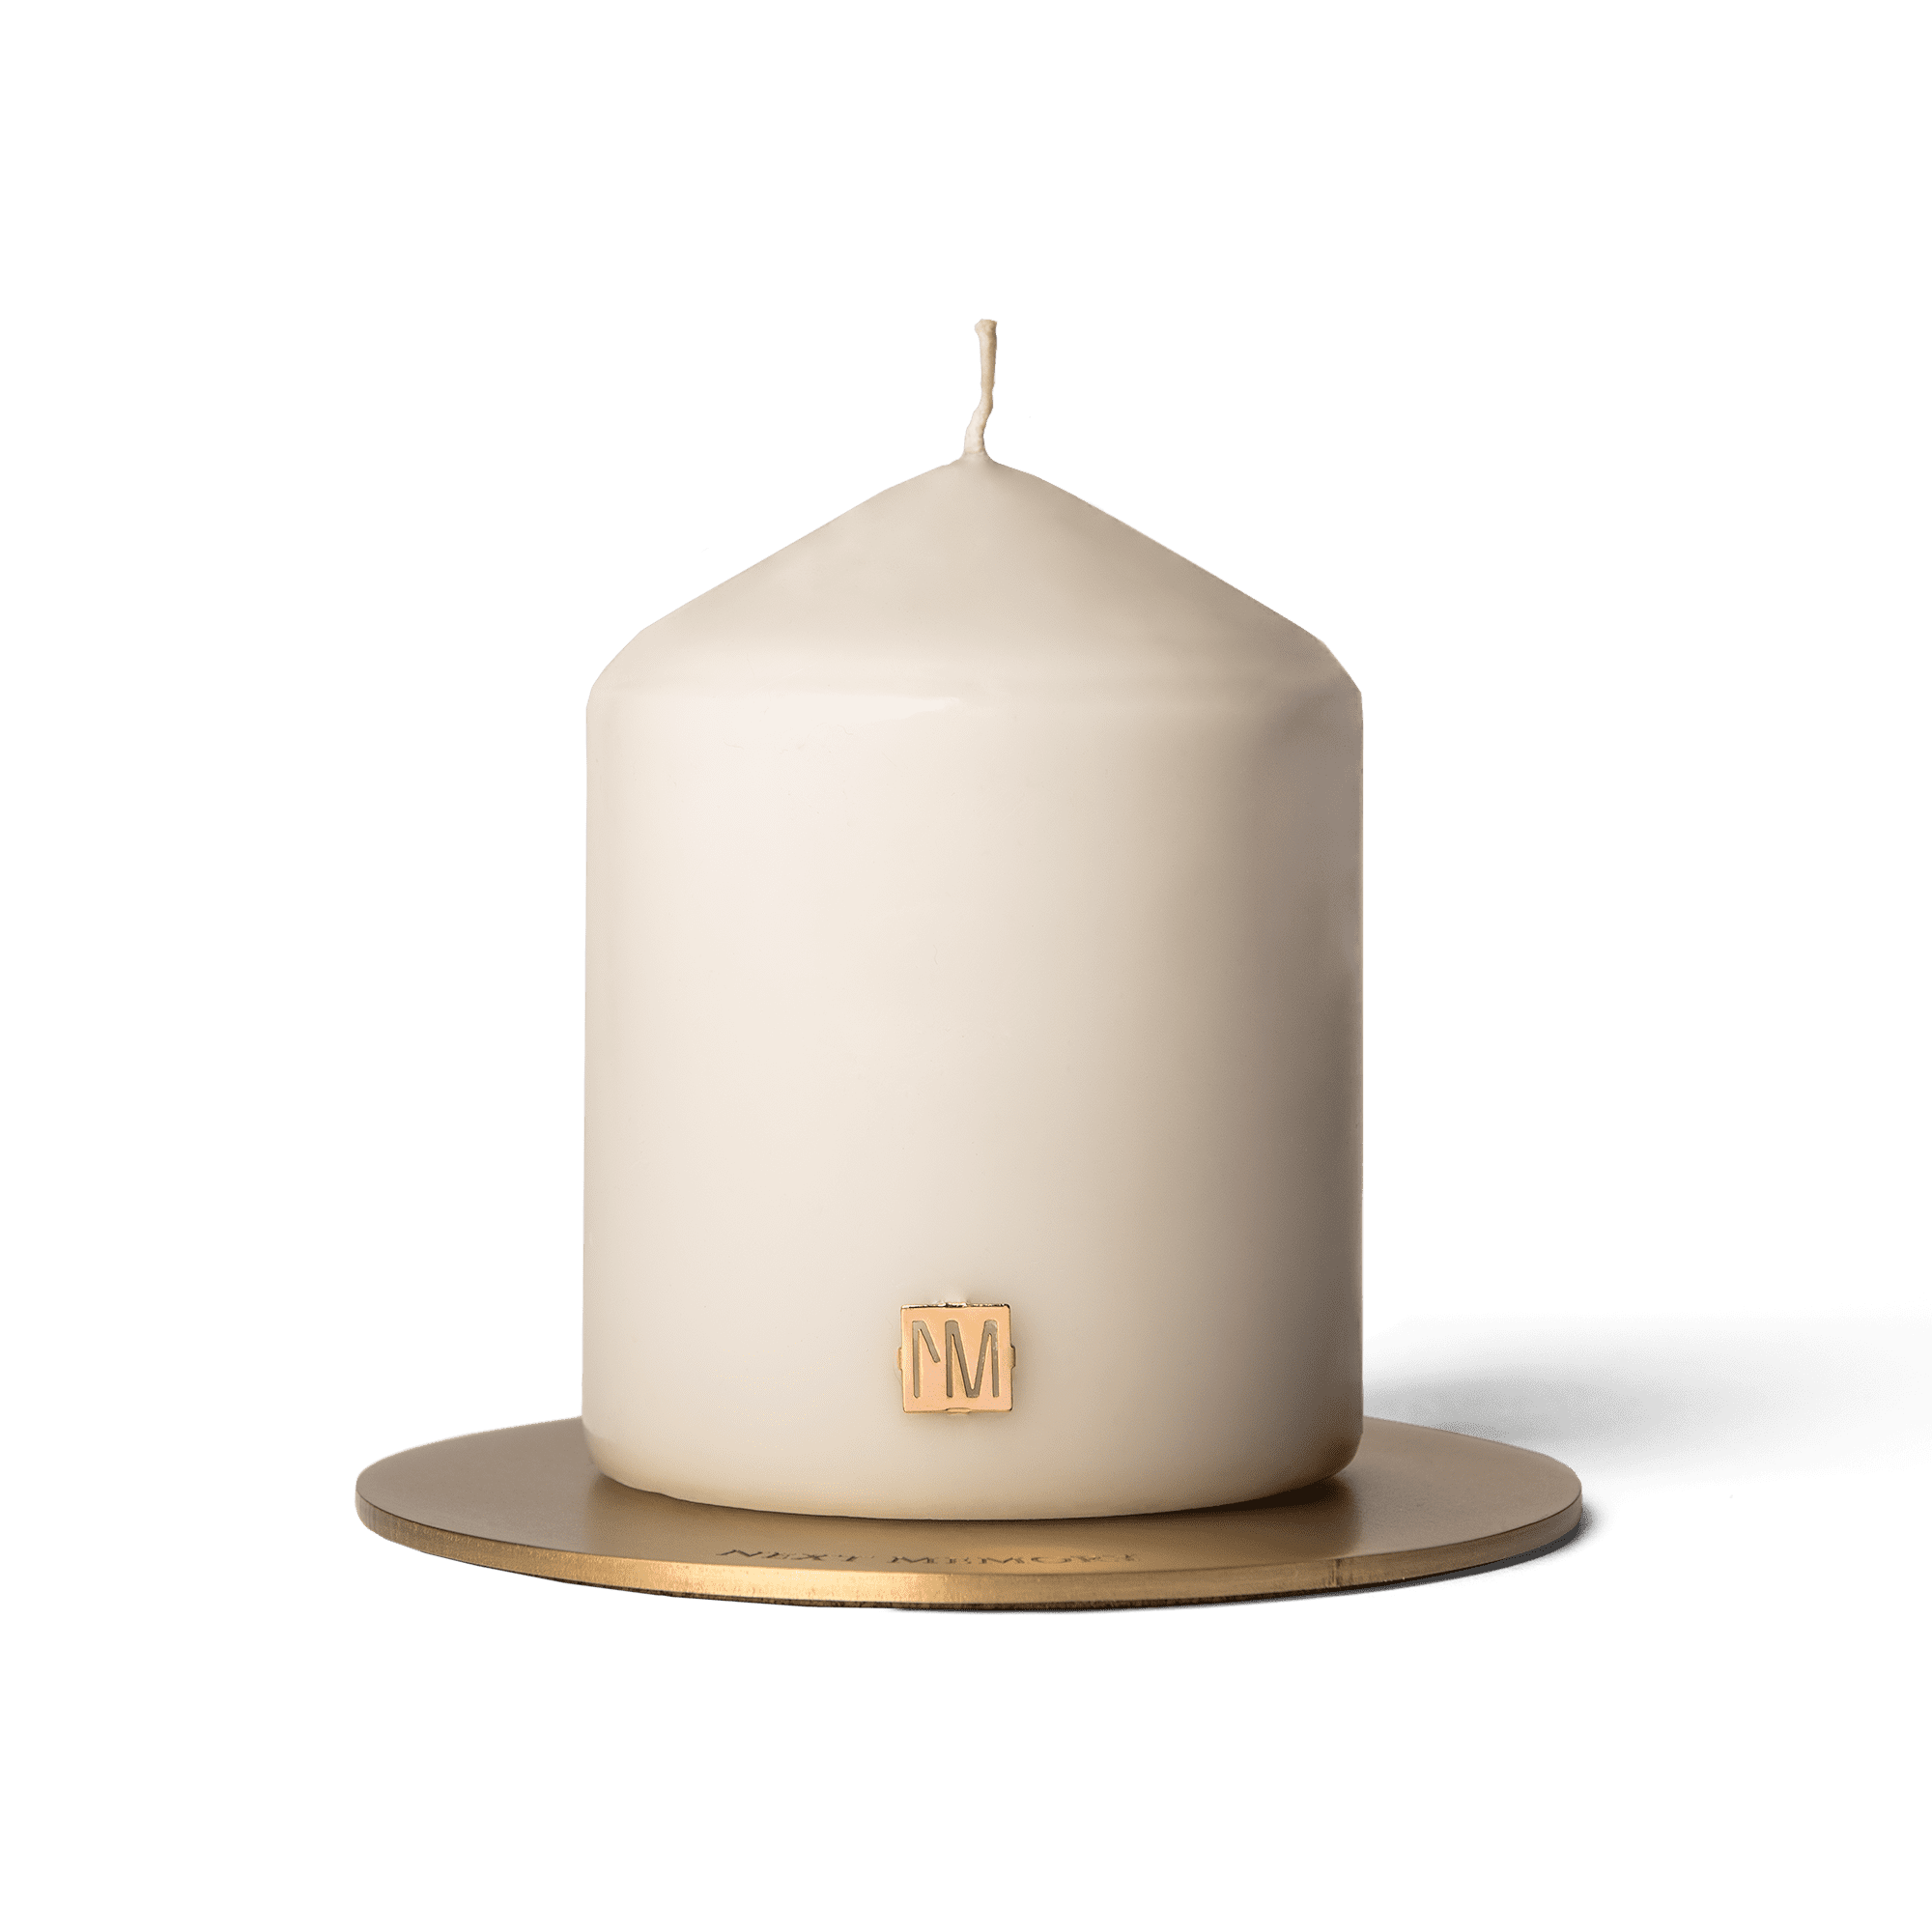 The Brass Pillar Candle Disk